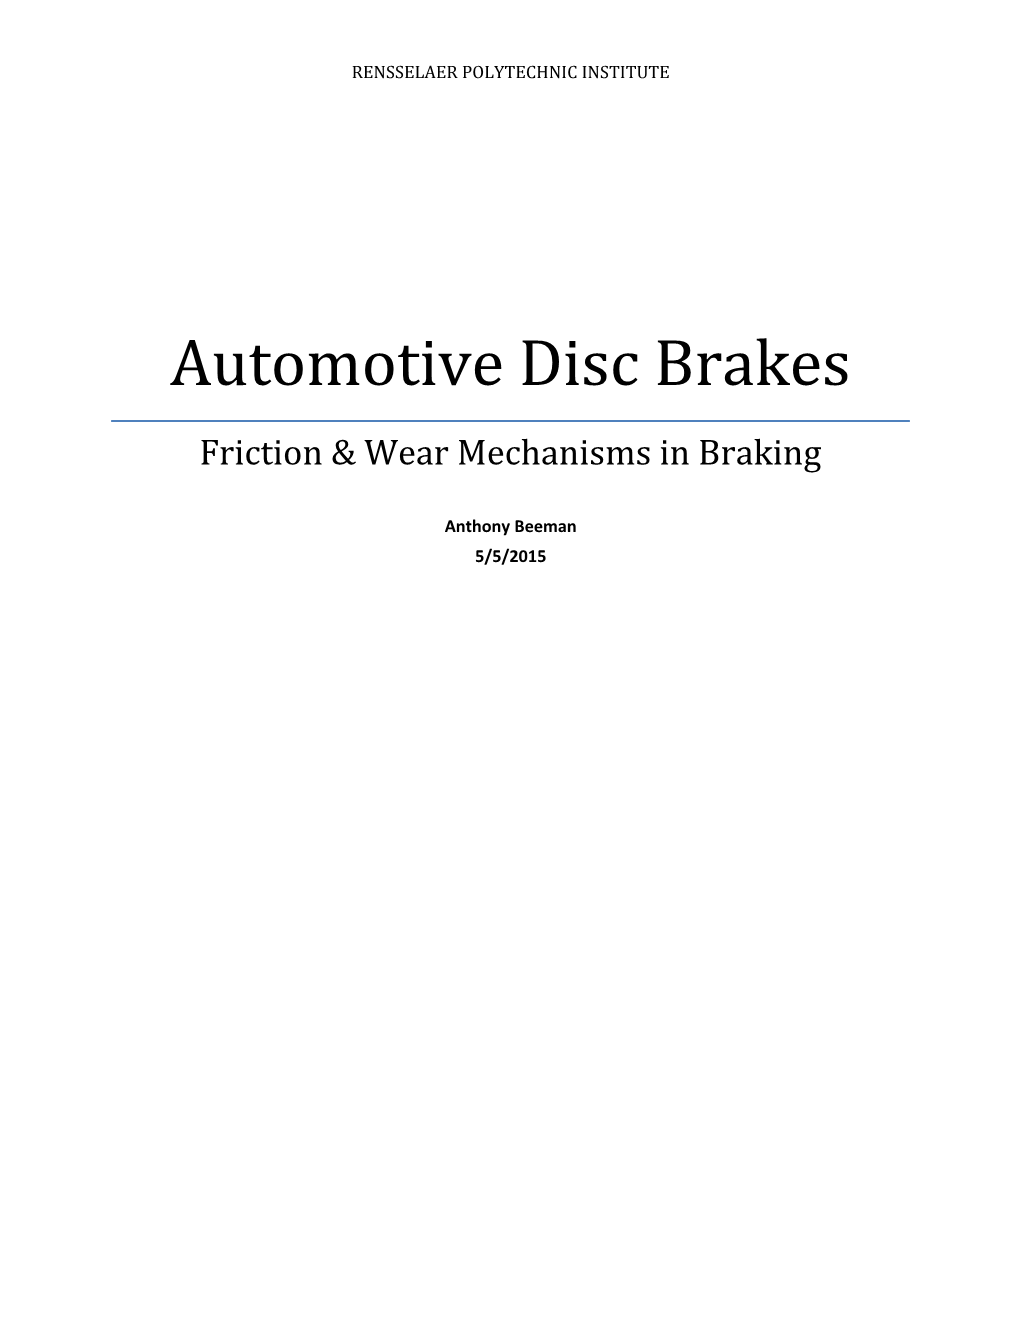 Automotive Disc Brakes